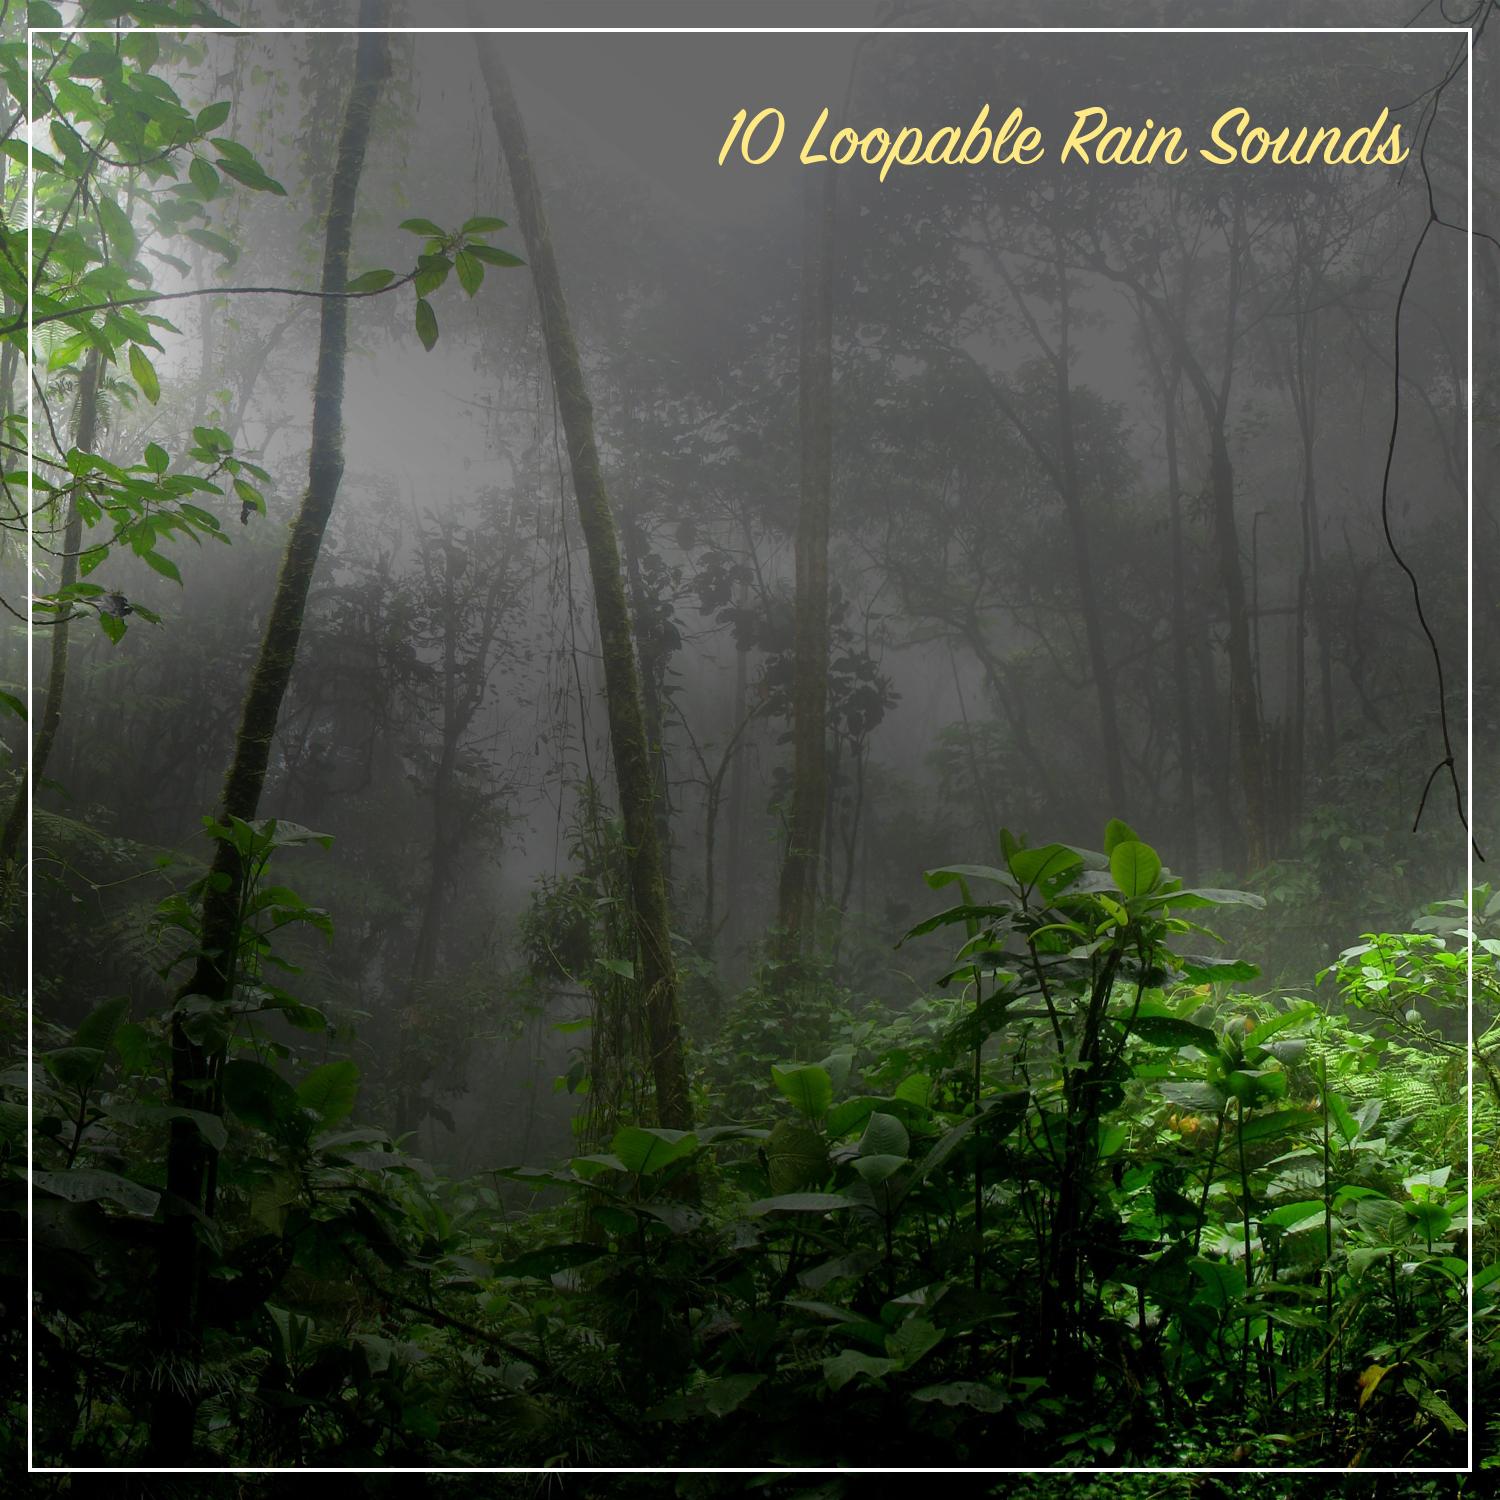 10 Loopable Rain Sounds - A Sleep Aid, Meditation & Yoga Guide, Study Sound or White Noise